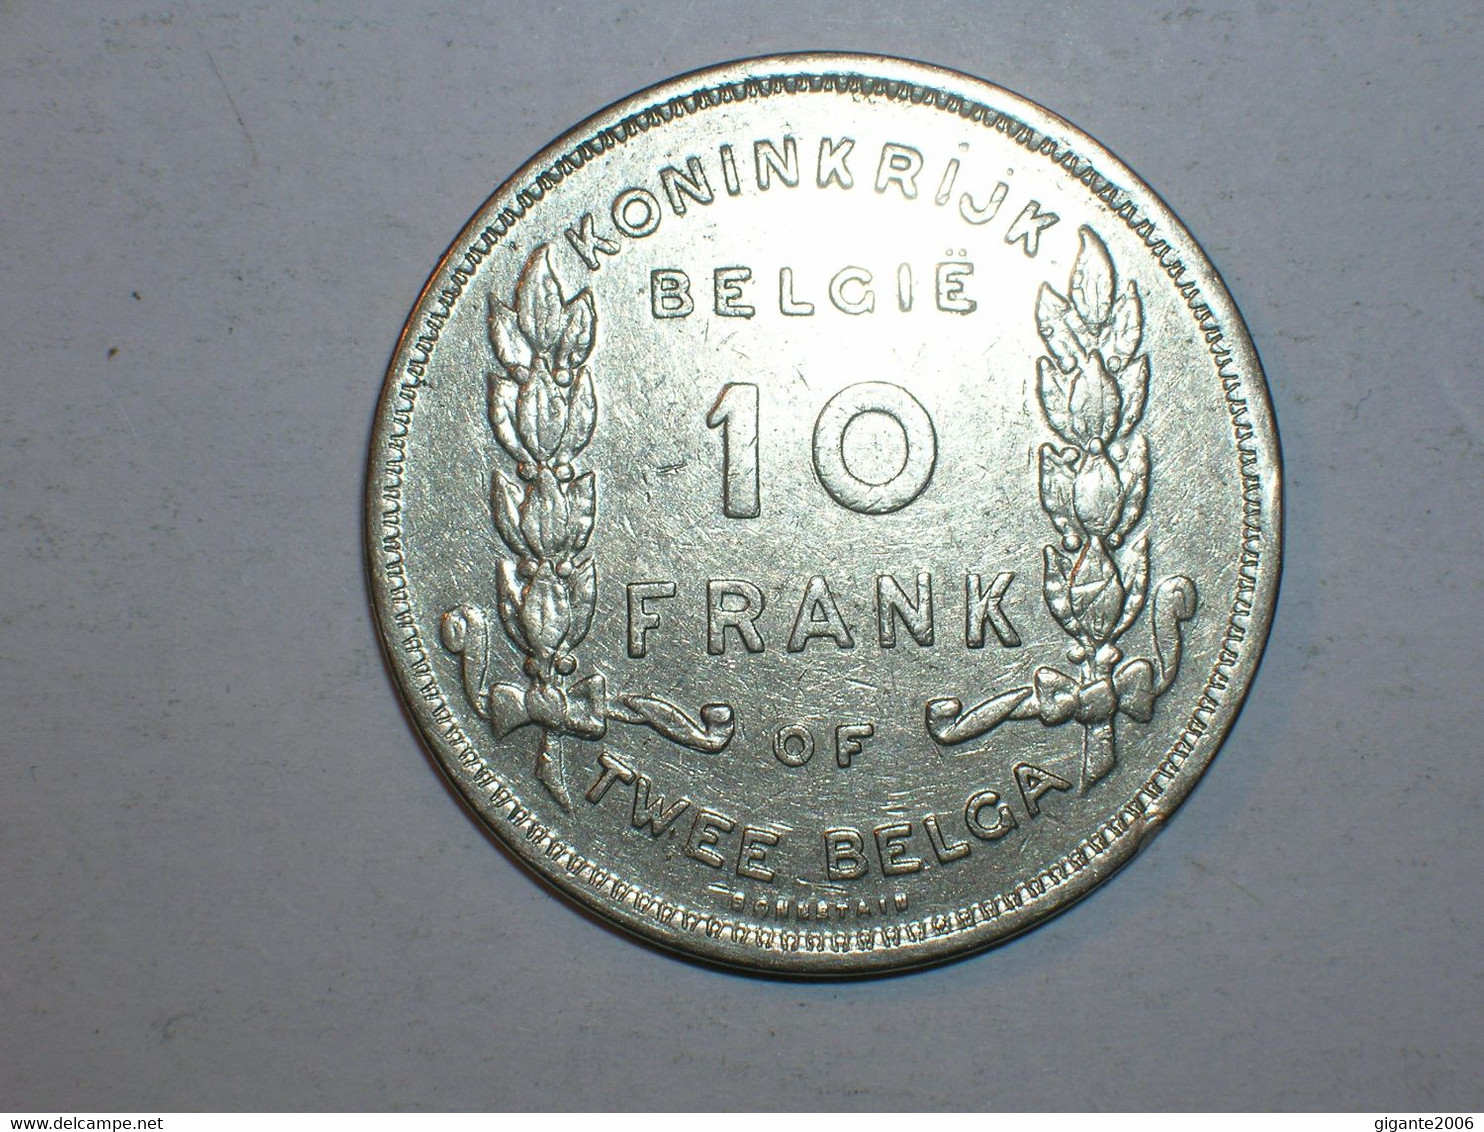 BELGICA 10 FRANCOS 1930 FL (9187) - 10 Frank & 2 Belgas